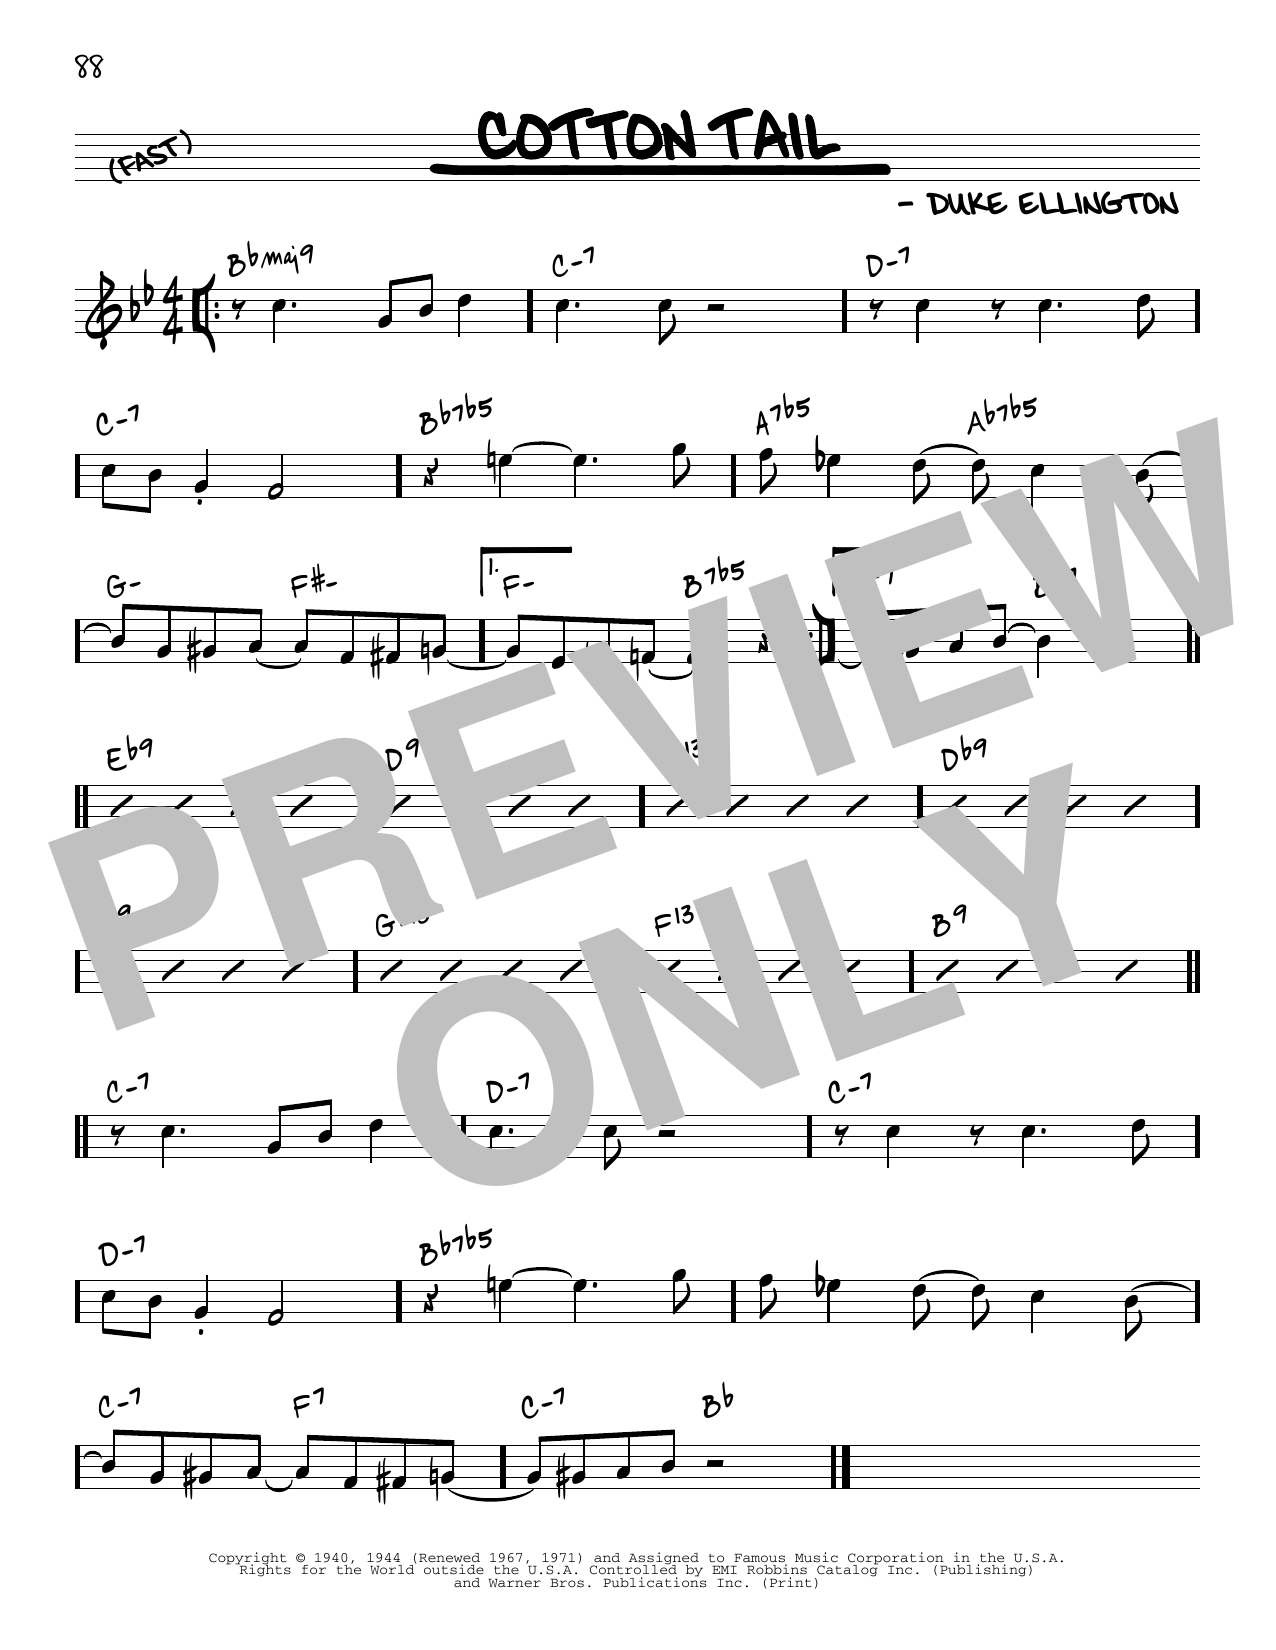 Download Duke Ellington Cotton Tail [Reharmonized version] (arr Sheet Music